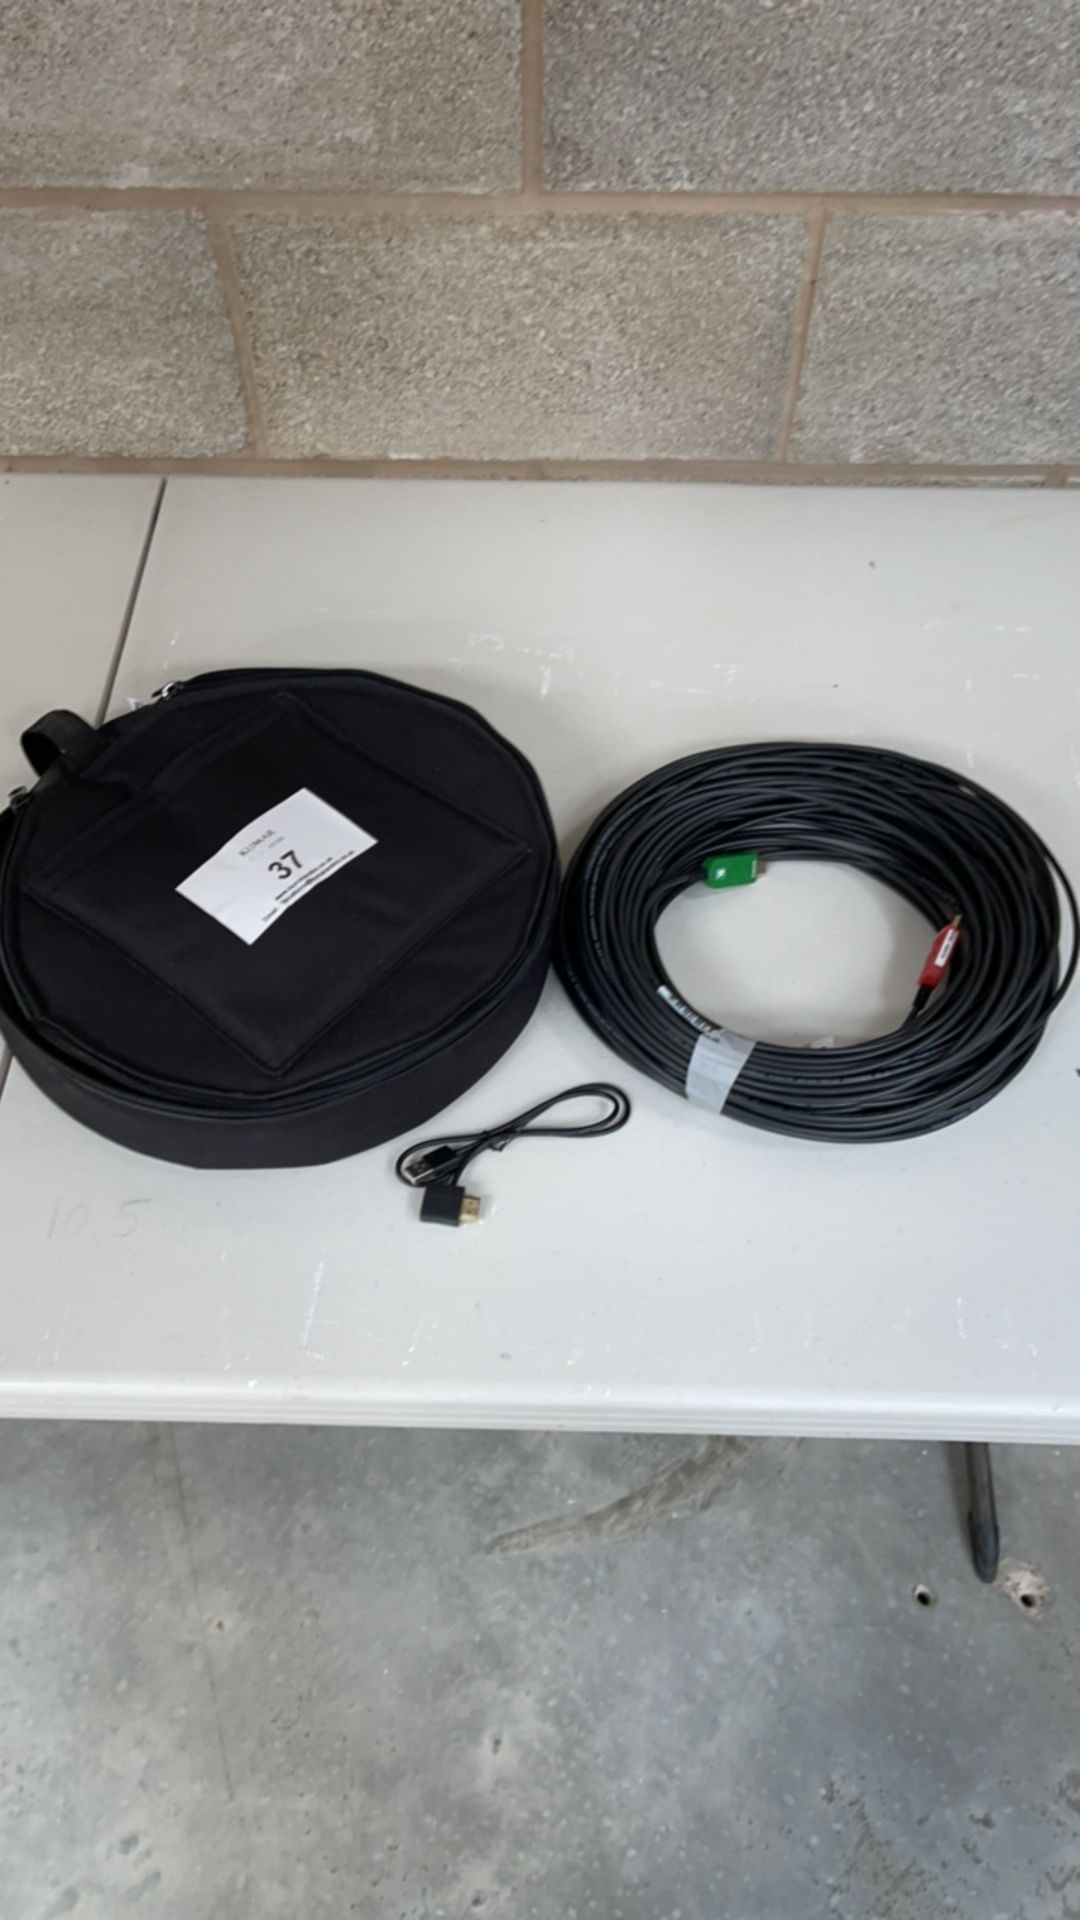 Kramer 60 meter 4K HDMI Fibre Cable c/w Bag - Image 2 of 4